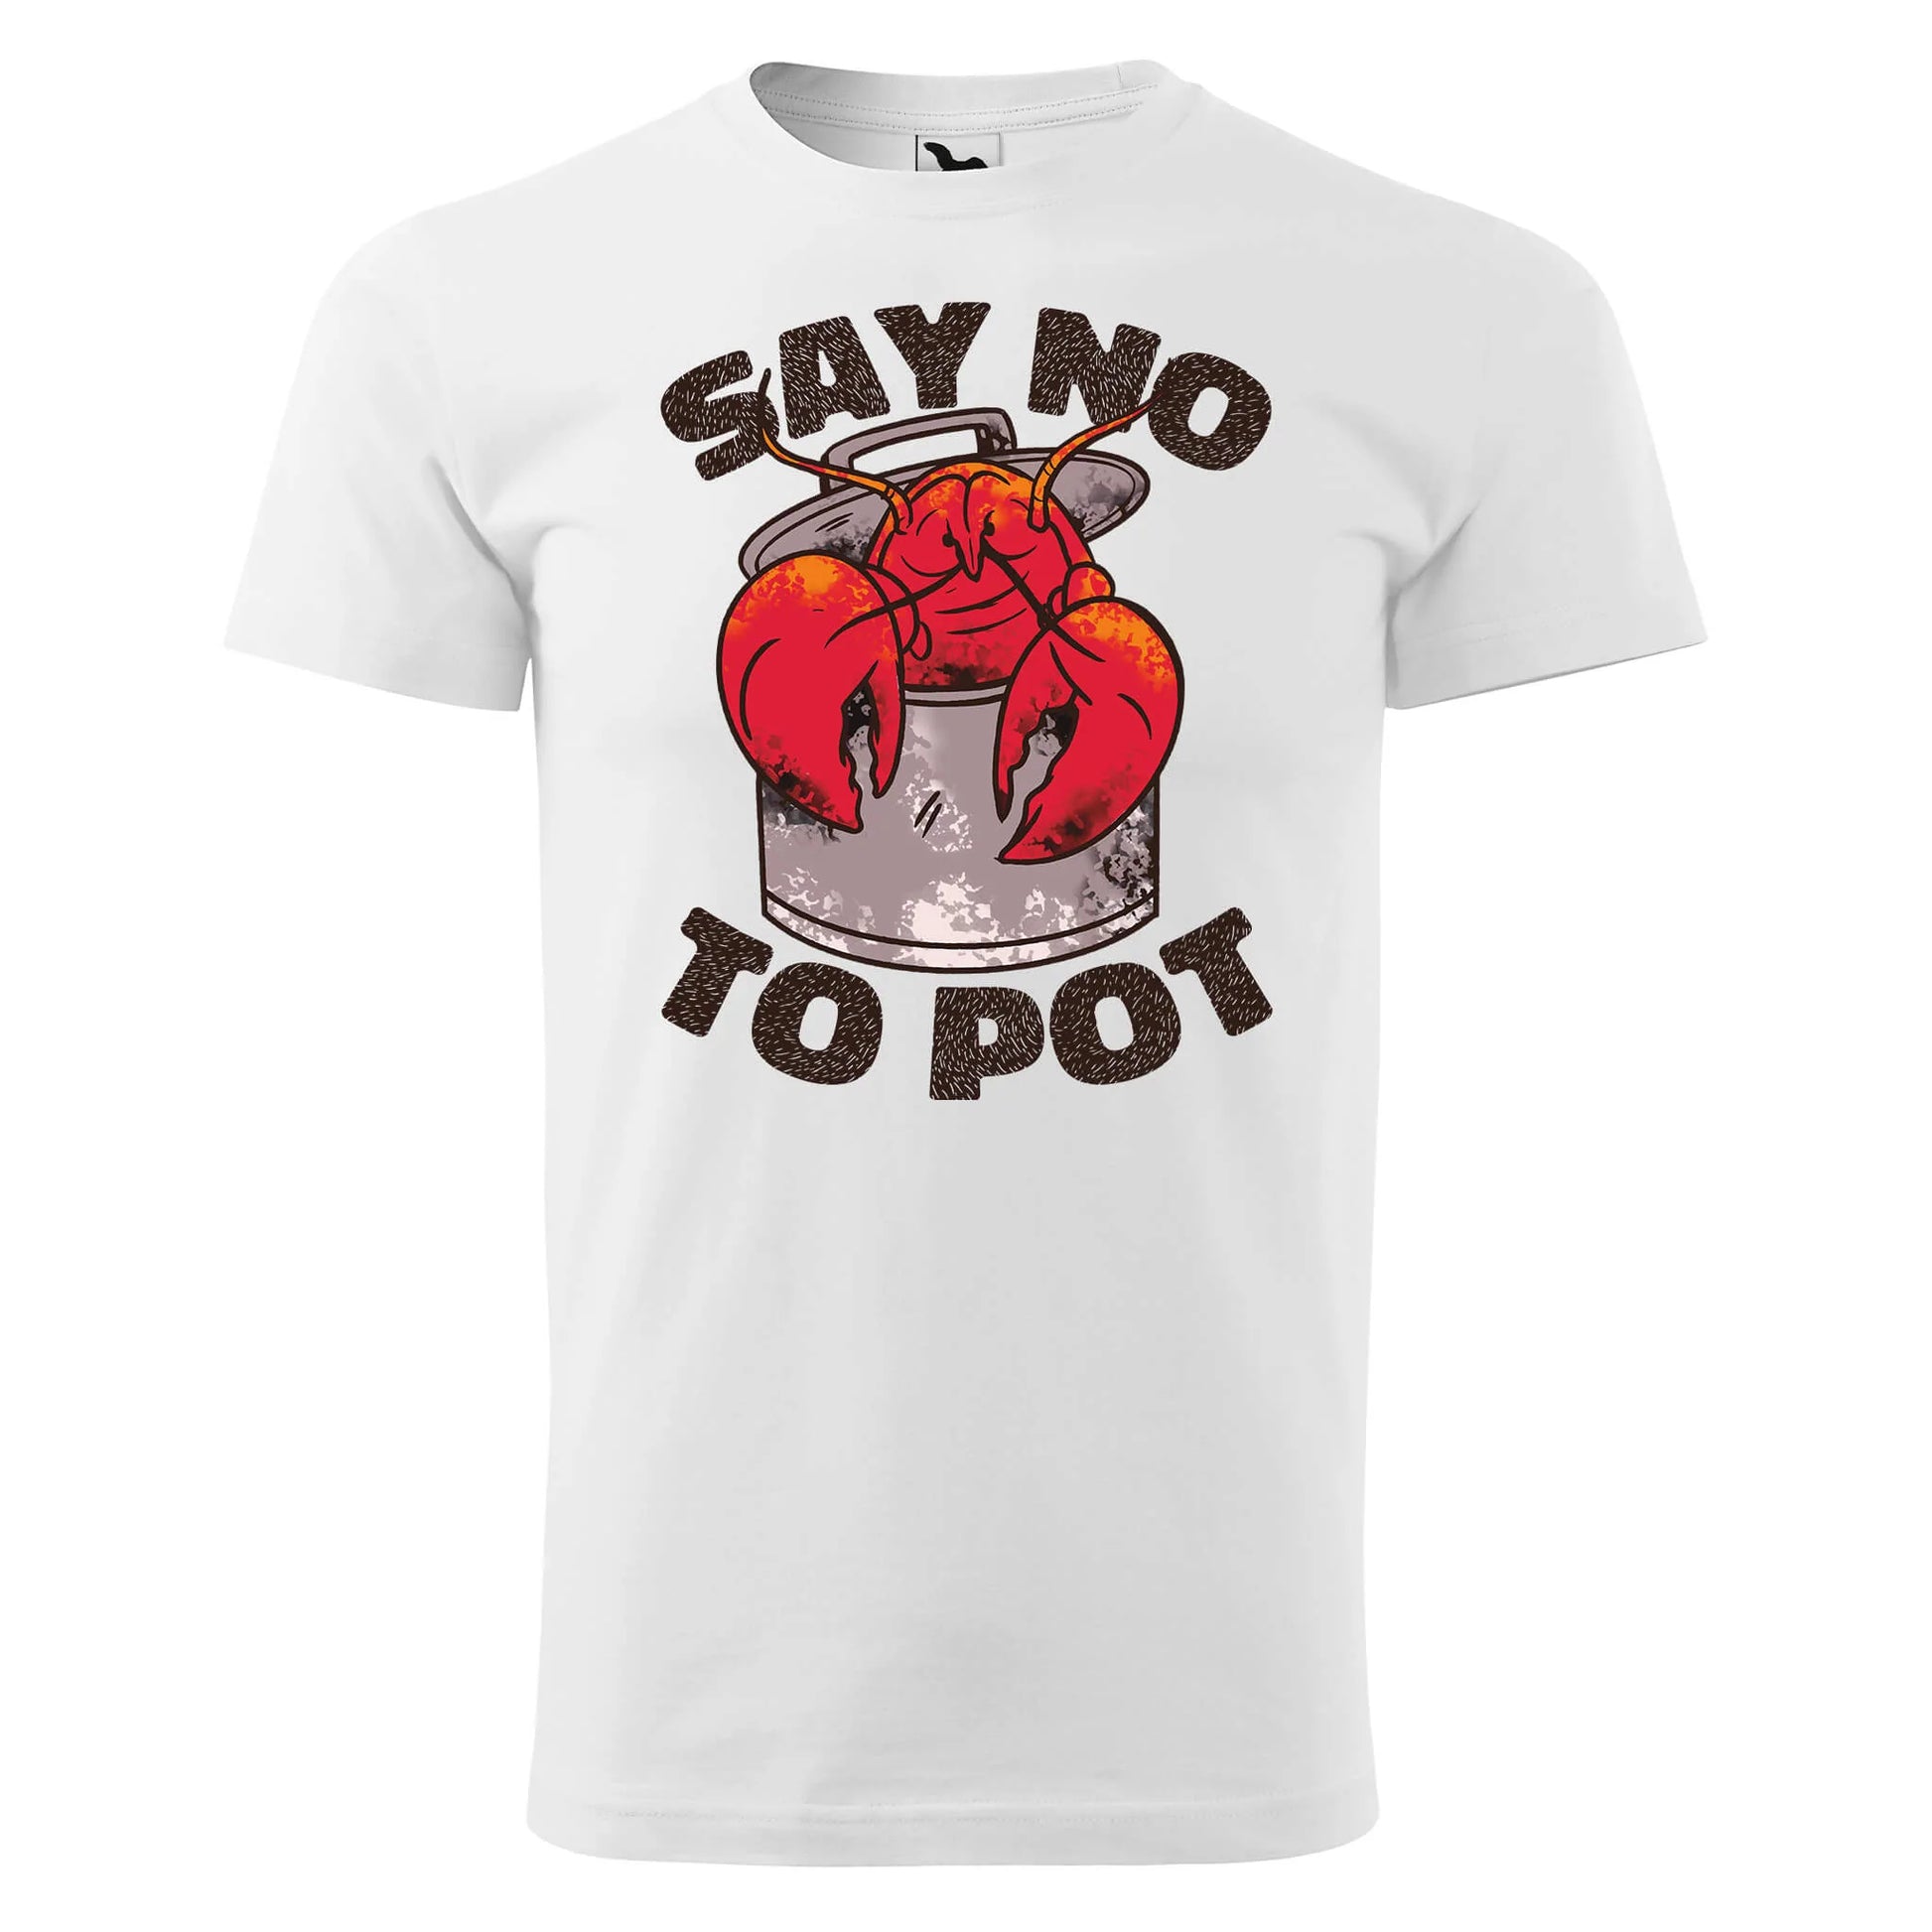 Say no to pot t-shirt - rvdesignprint